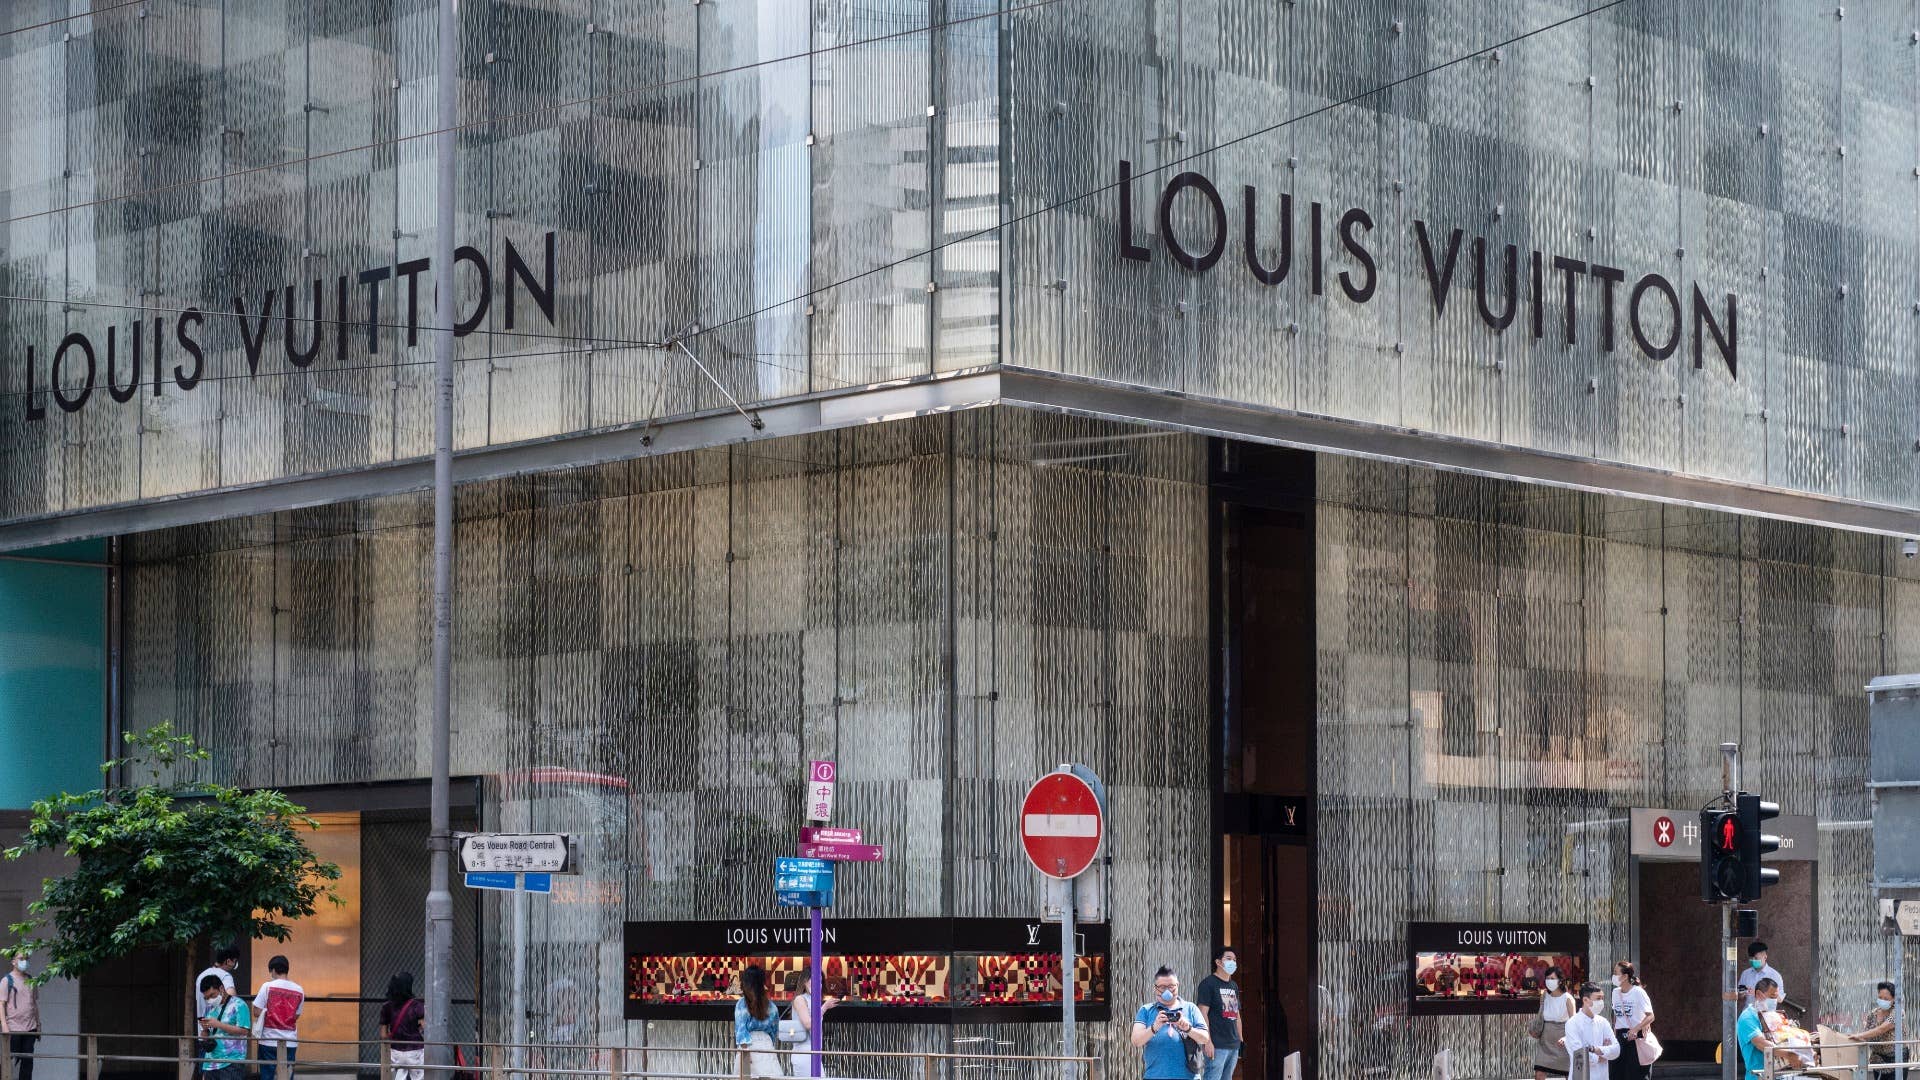 HD wallpaper: photo of Louis Vuitton building, white LV concrete building  near cars